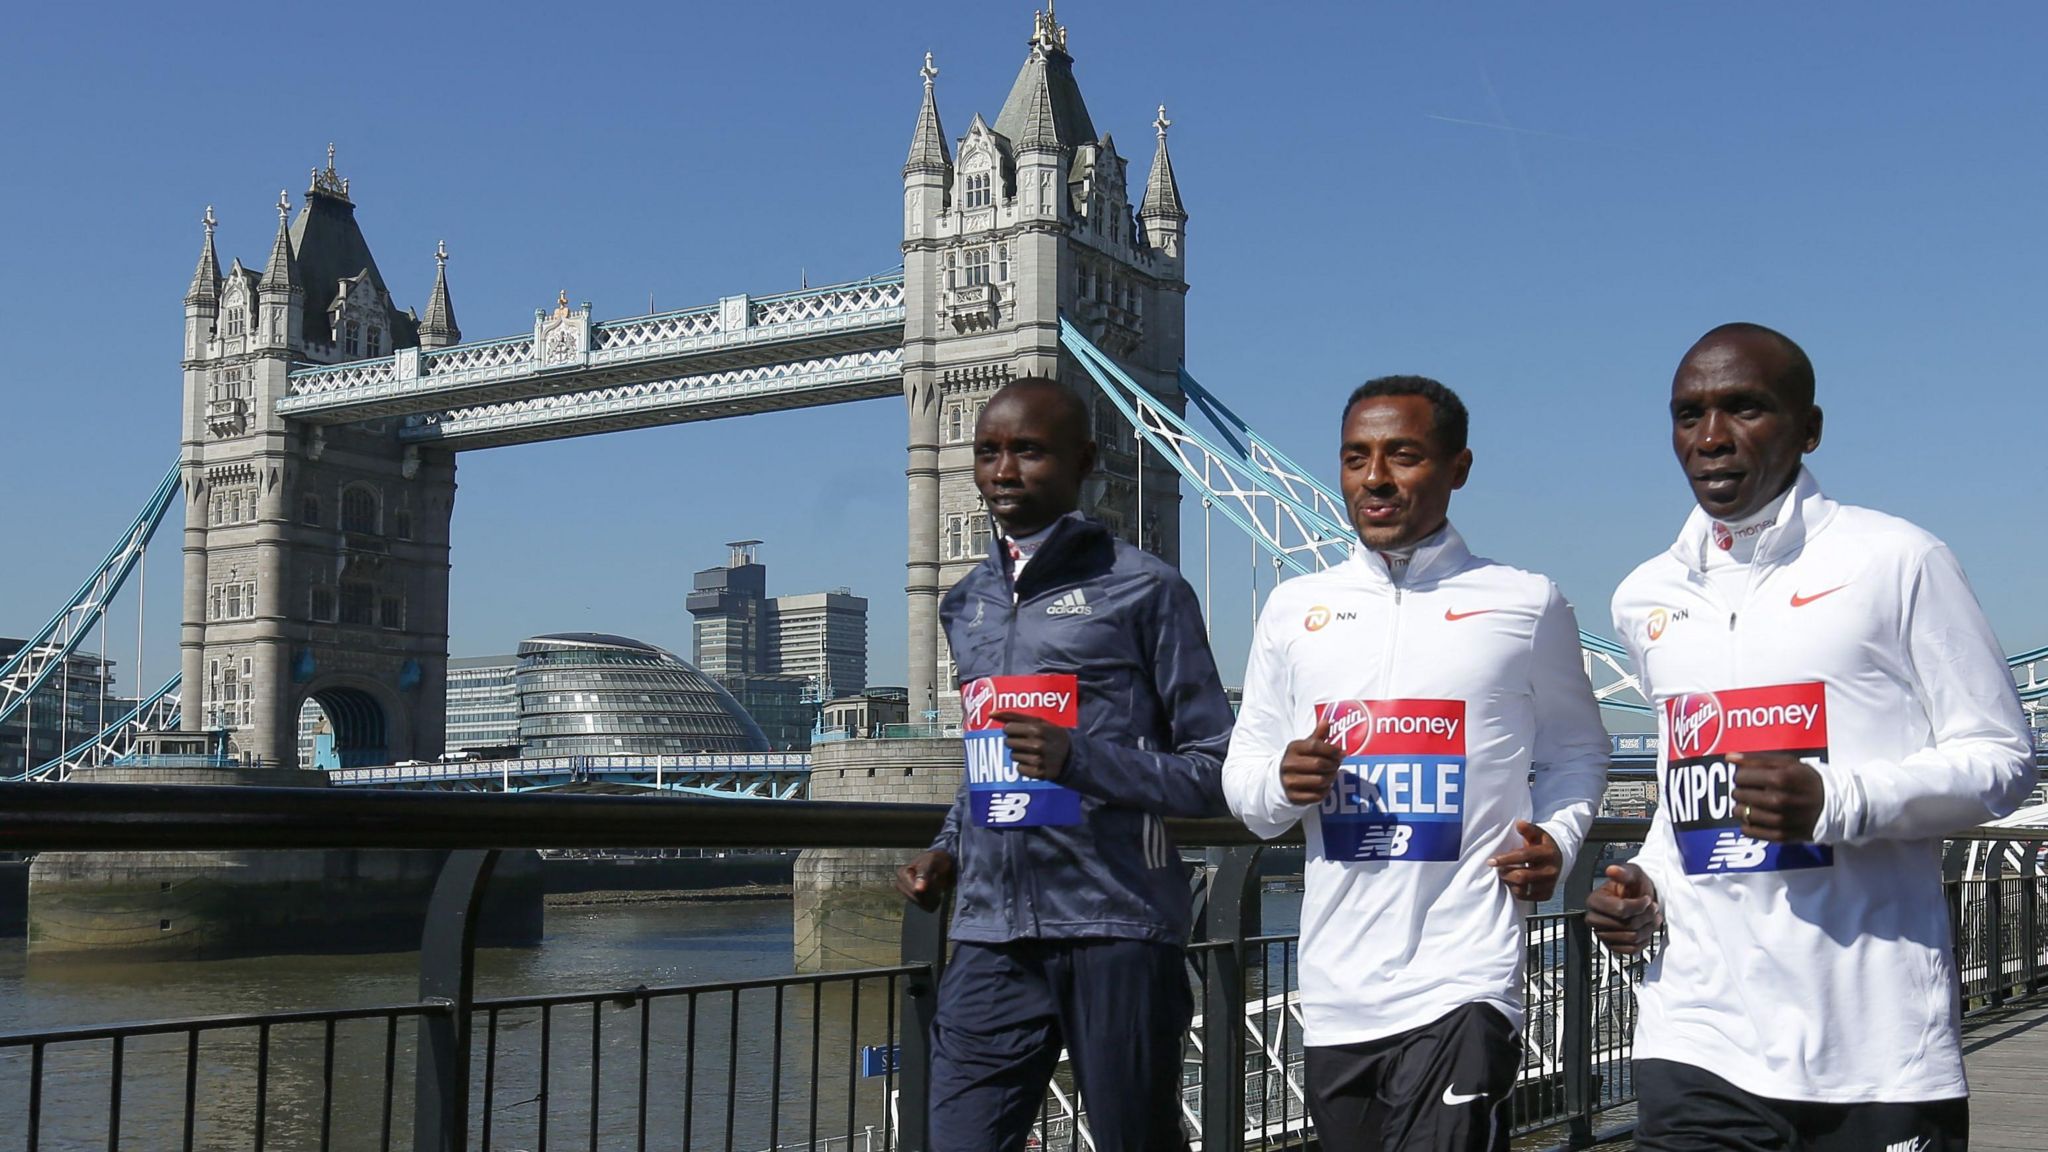 Kenya's Daniel Wanjiru, Ethiopia's Kenenisa Bekele and Kenya's Eliud Kipchoge pose during a photocall for the London marathon by Tower Bridge